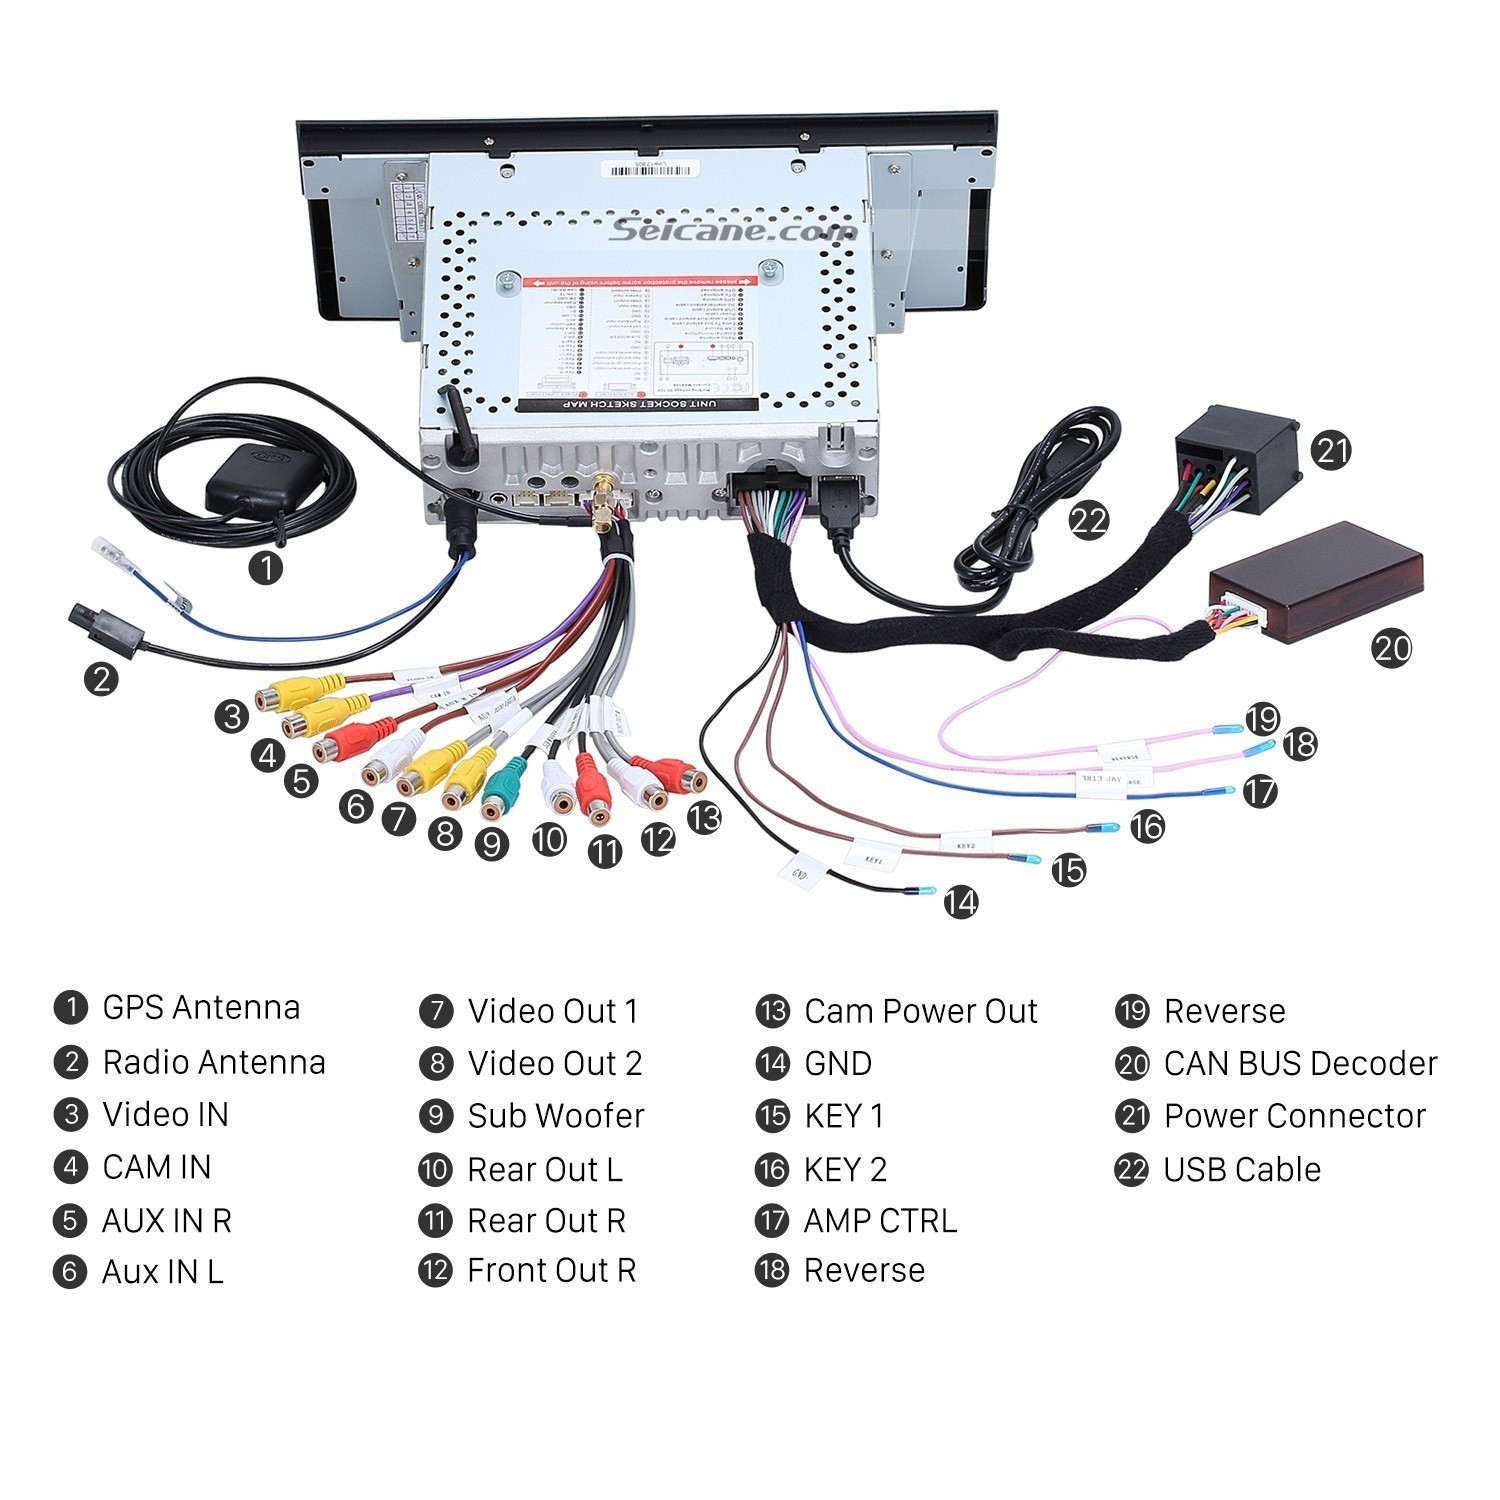 5 Channel Amp Wiring Diagram Amp Wiring Diagram Car Download Of 5 Channel Amp Wiring Diagram